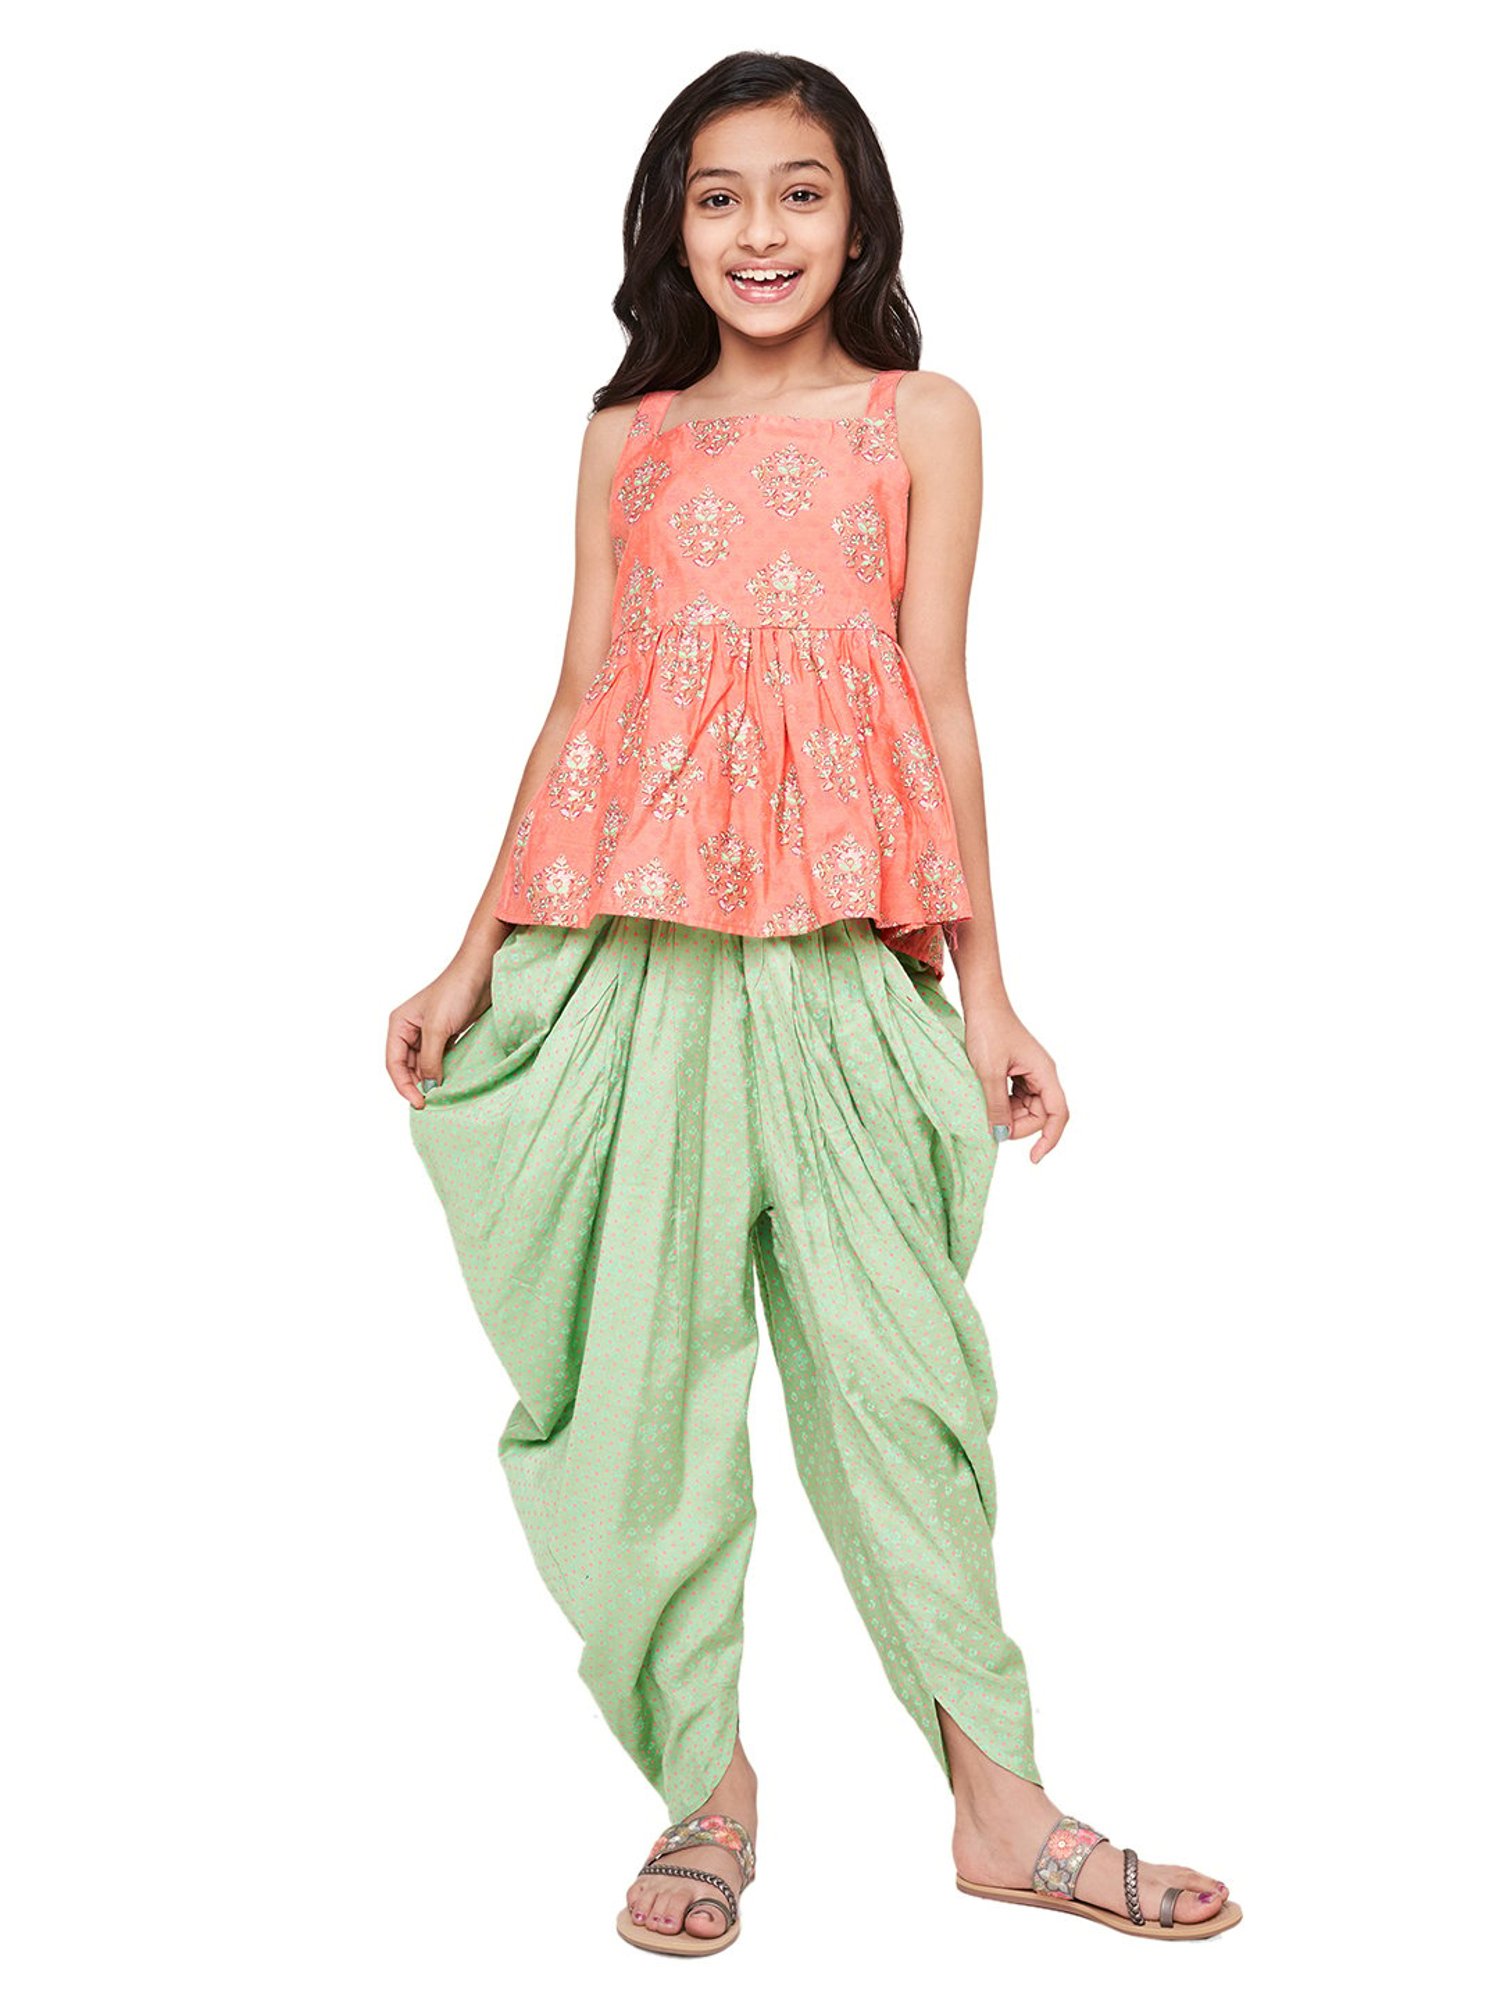 Slim Girls Green Jeans Price in India  Buy Slim Girls Green Jeans online  at Shopsyin